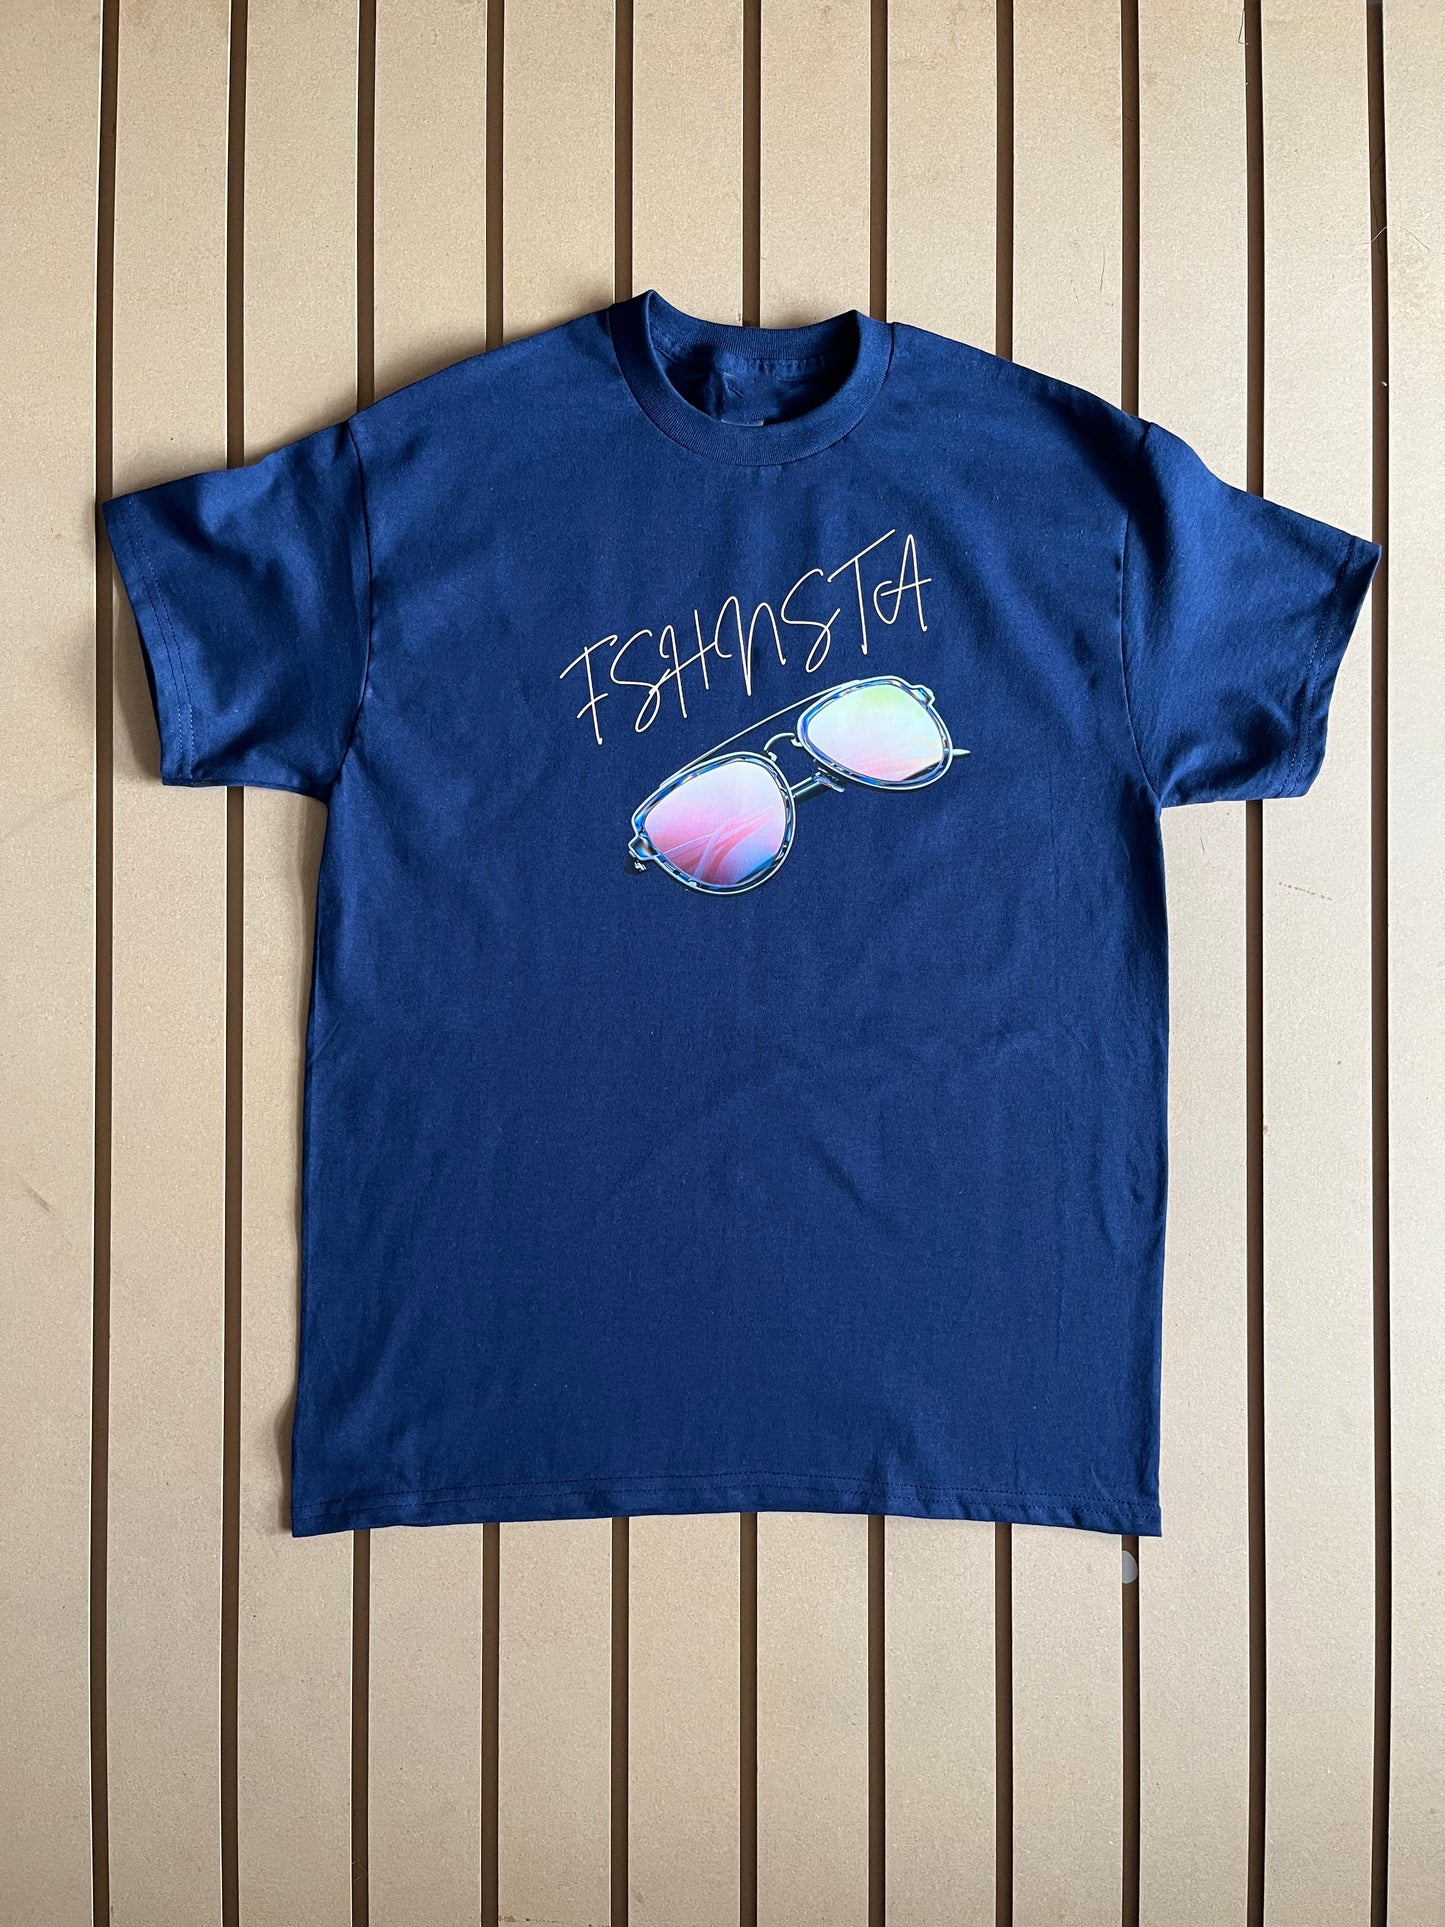 Fshnsta Signature Logo Sunglasses - Relaxed Fit Tee Navy